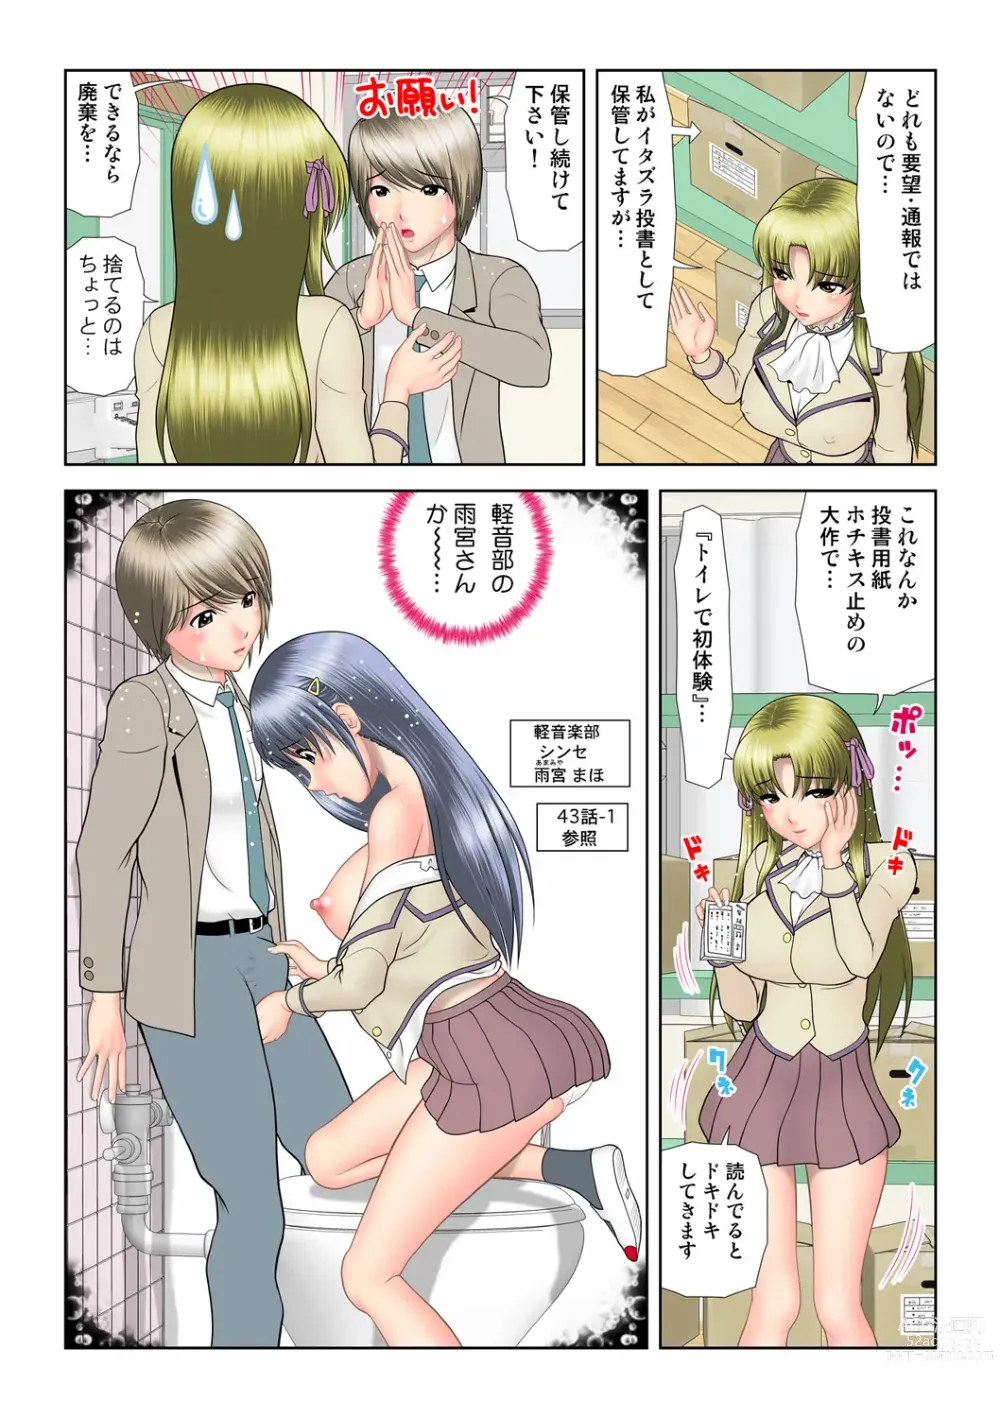 Page 106 of manga HiME-Mania Vol. 47